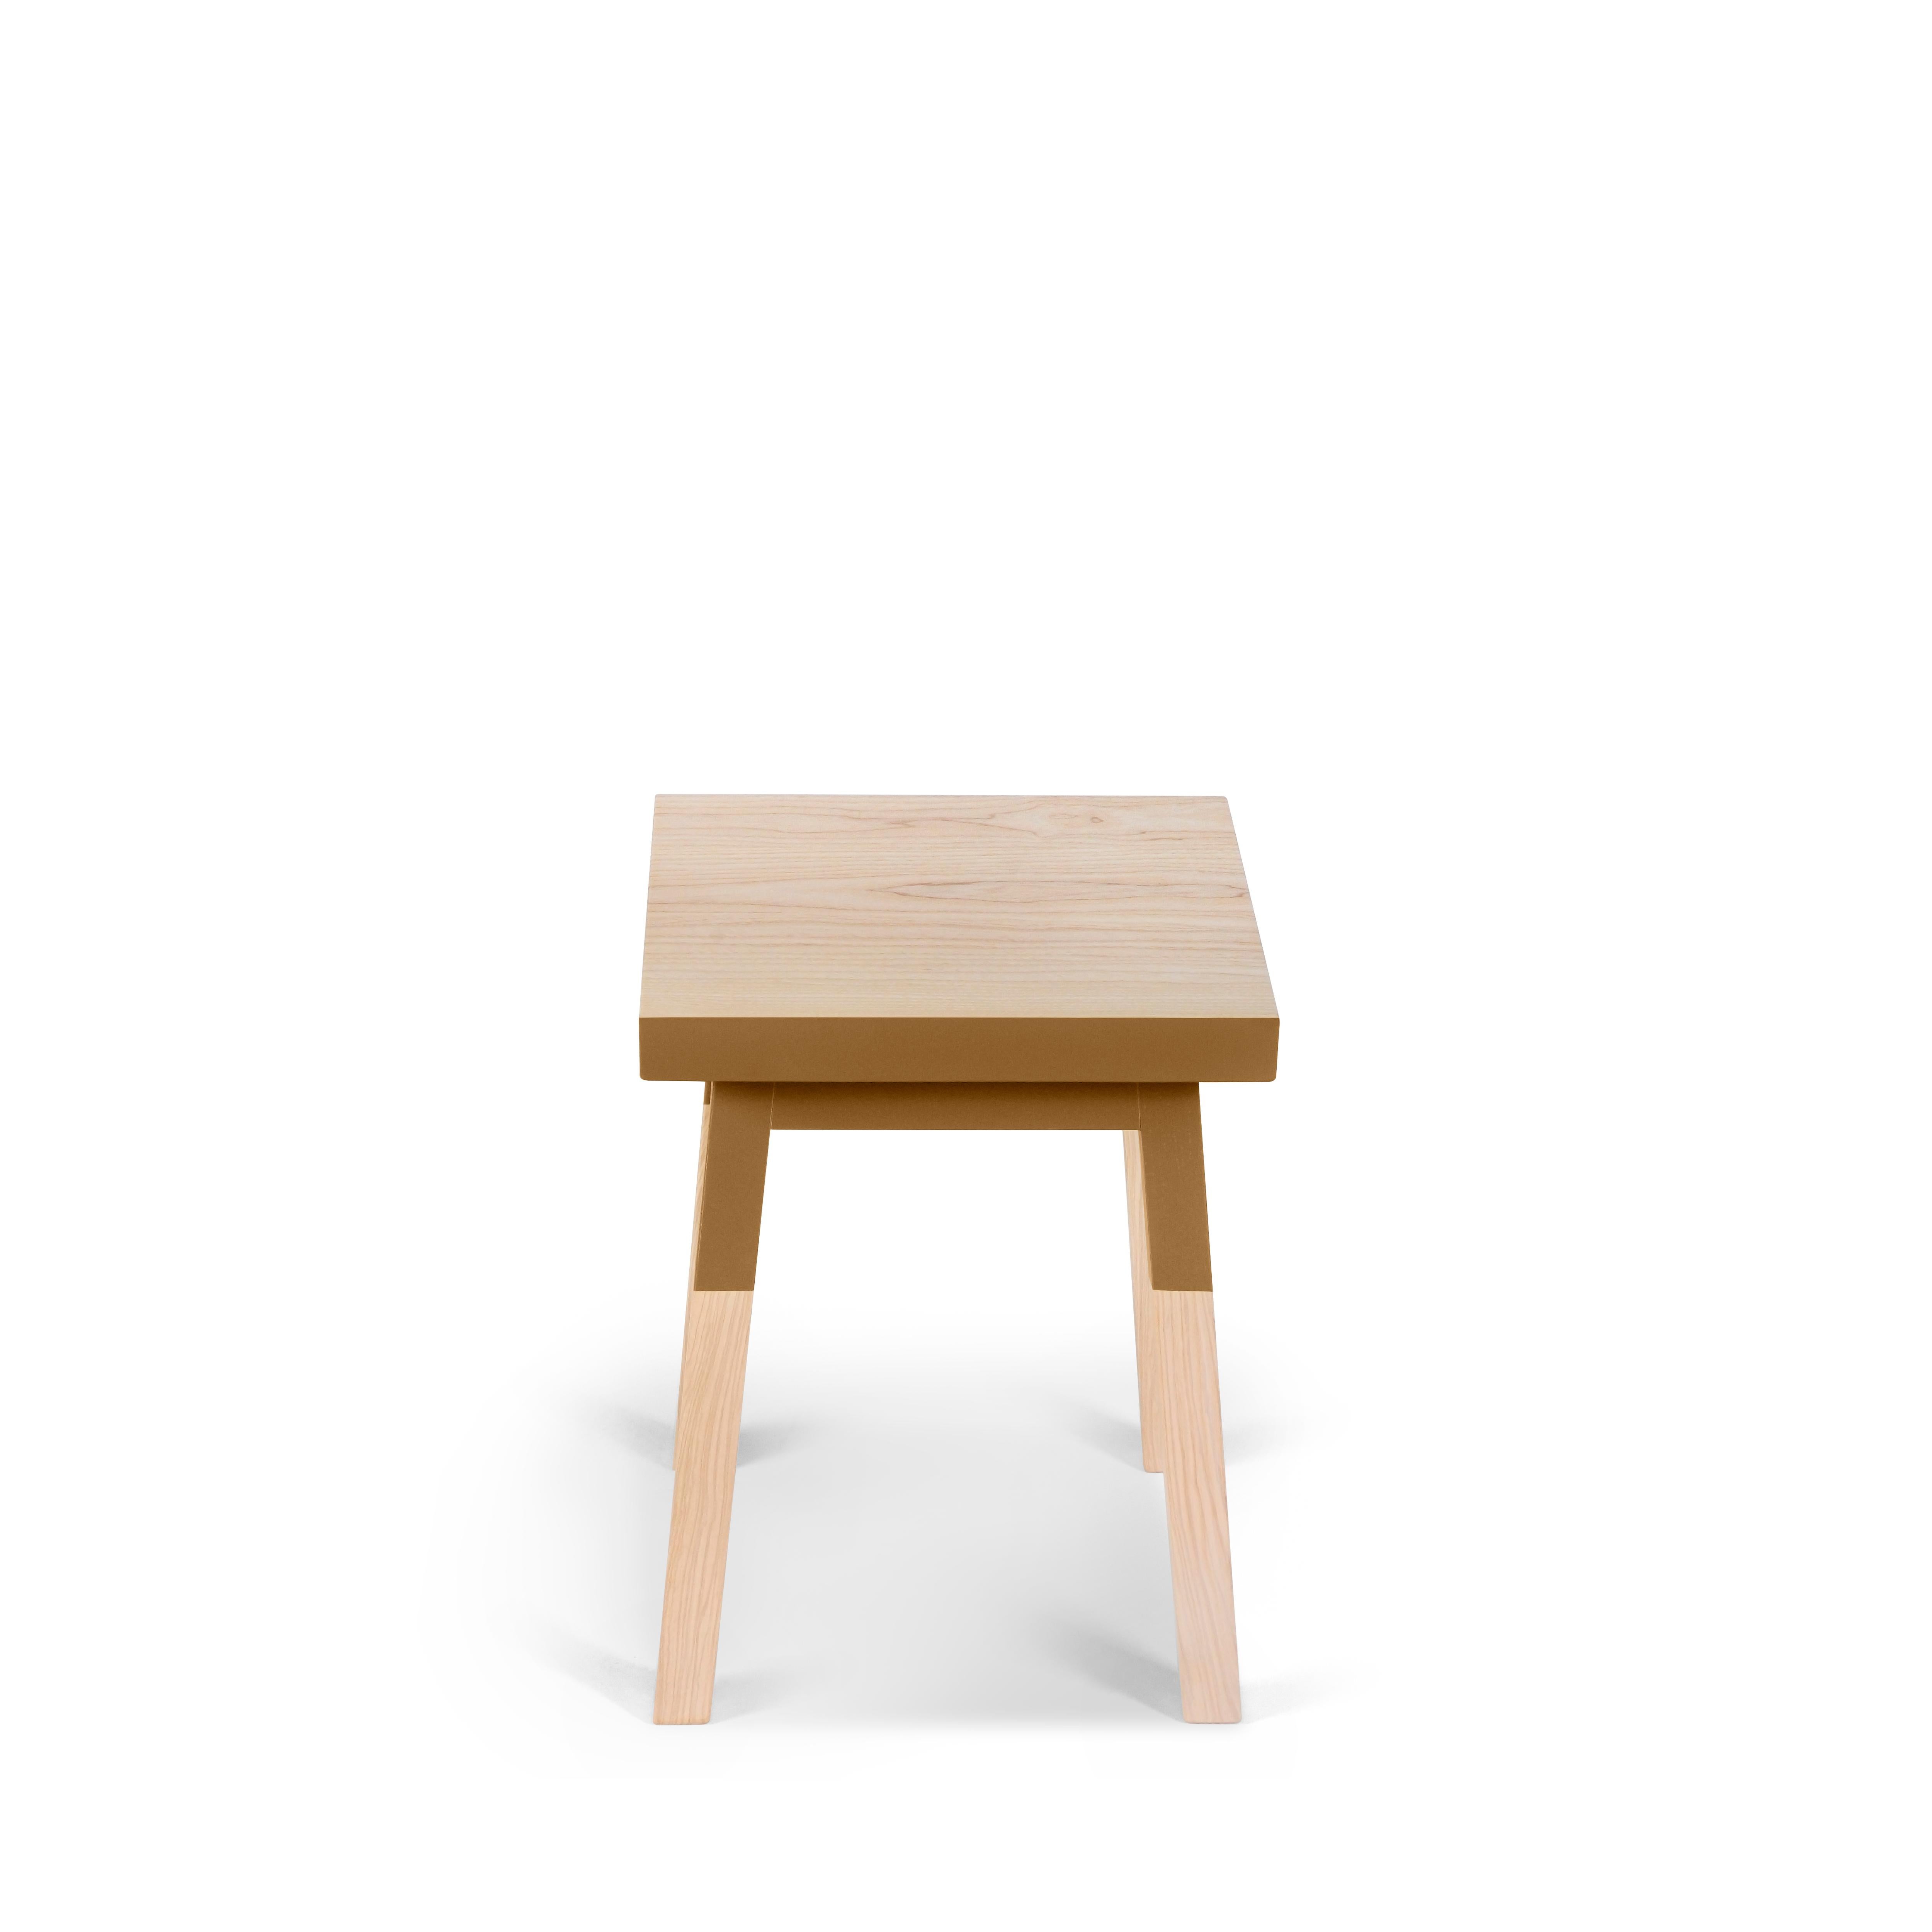 eric stools